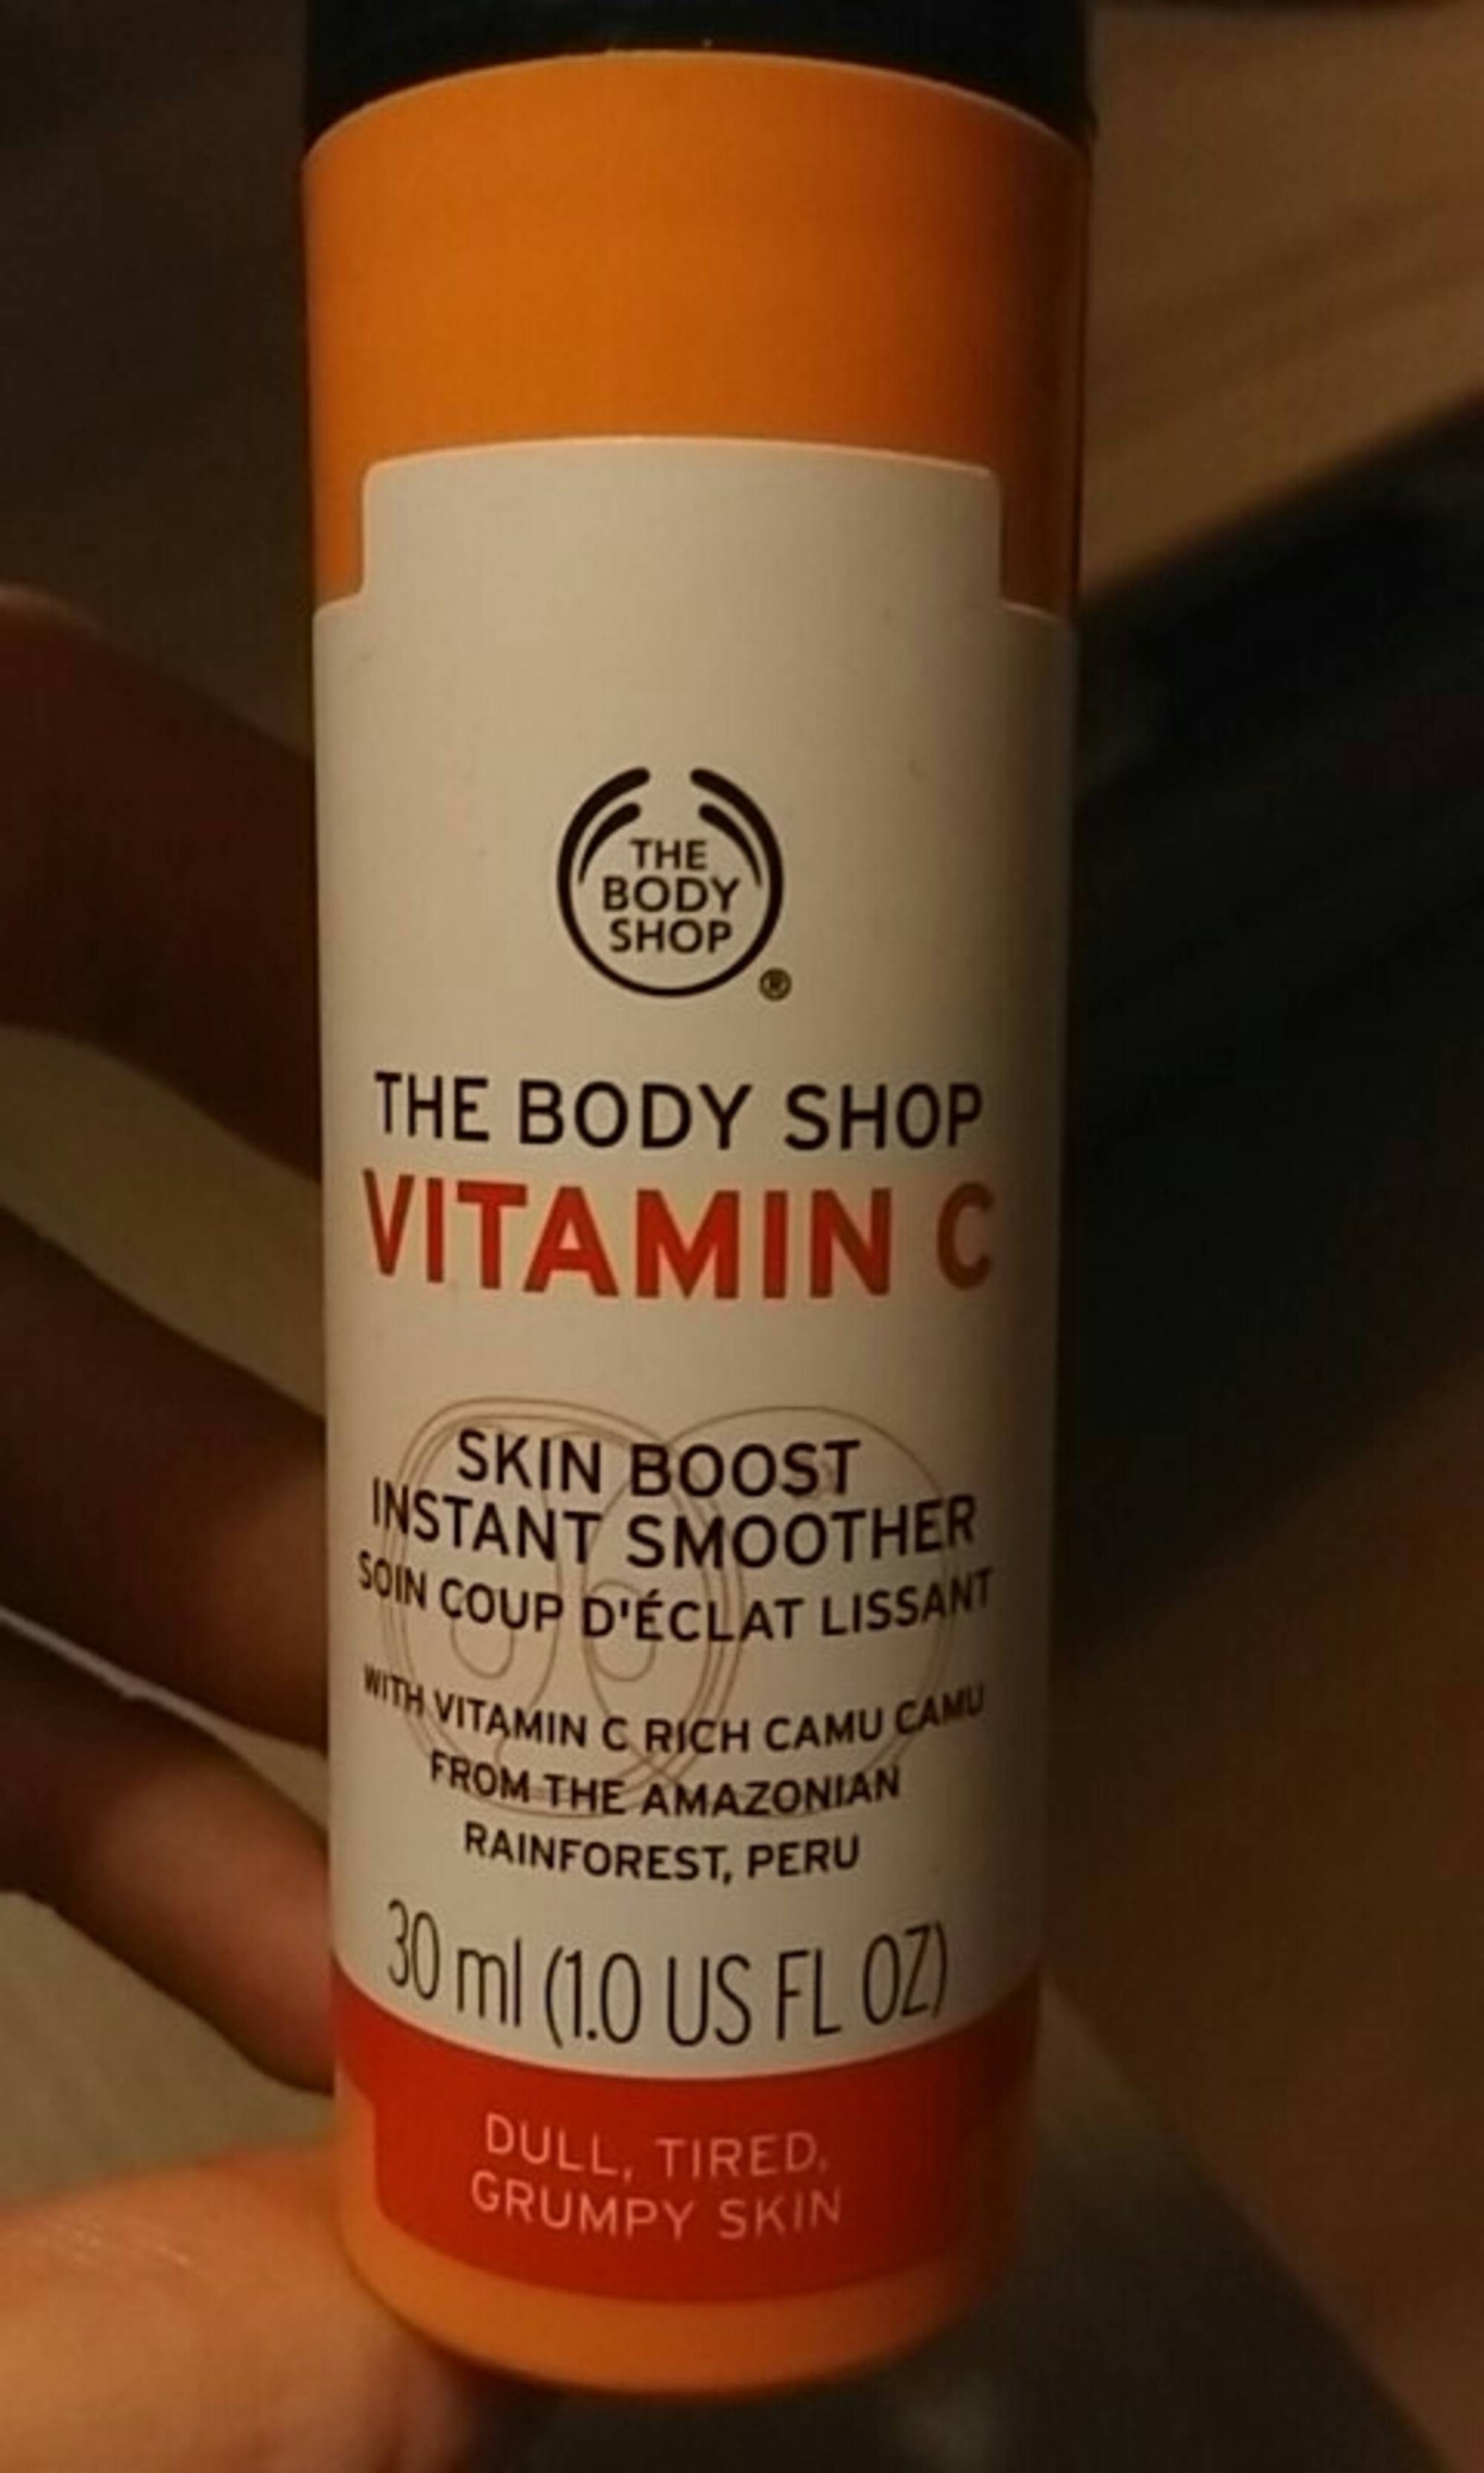 THE BODY SHOP - Vitamine C - Soin coup d'éclat lissant